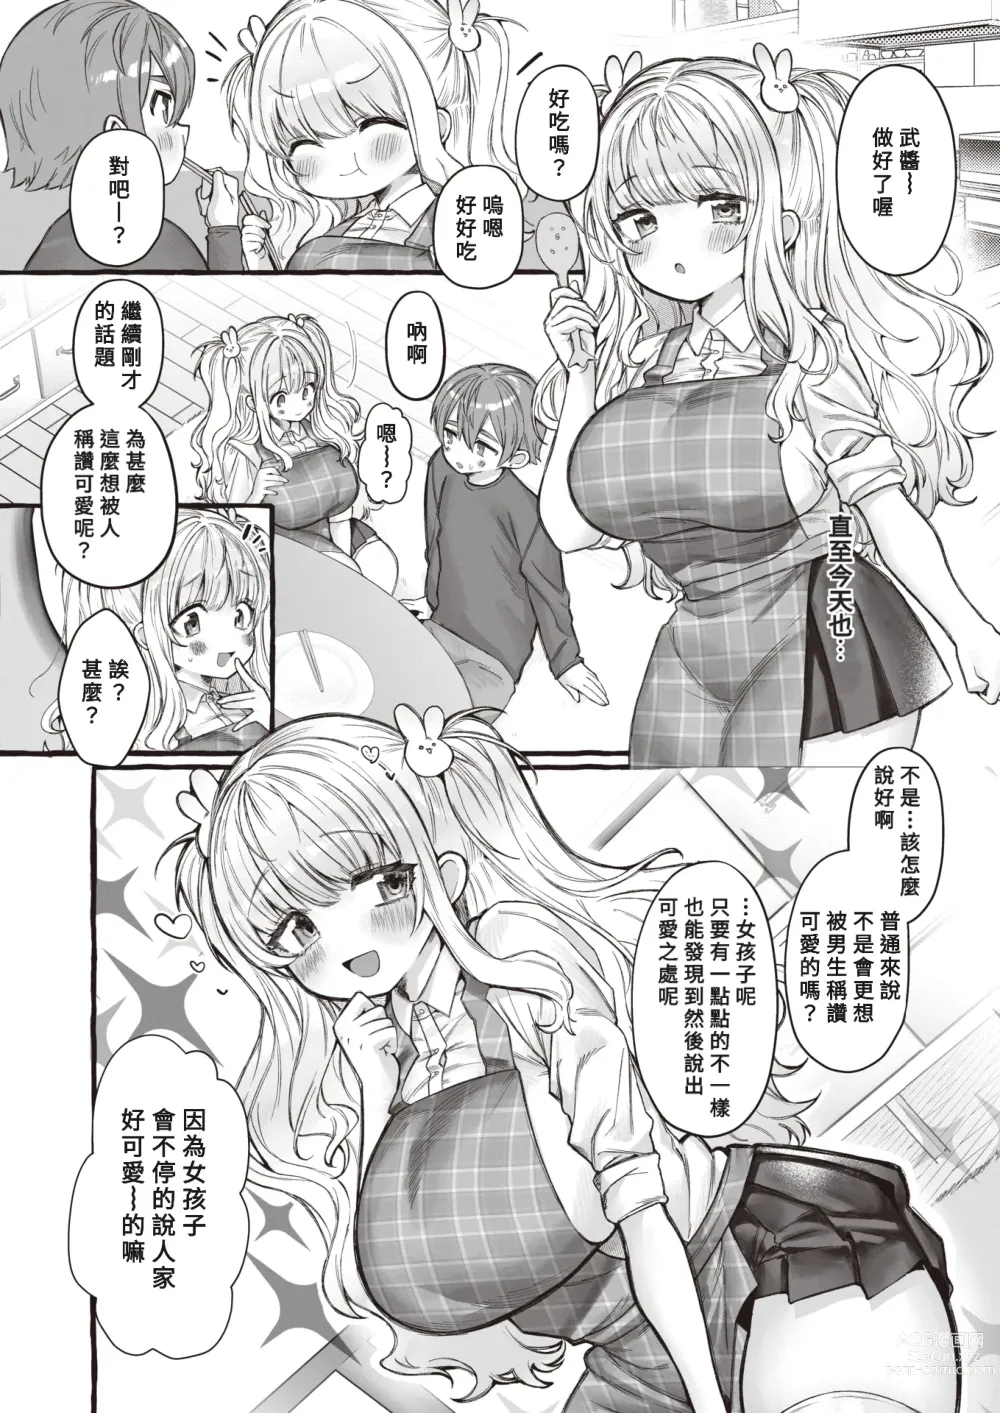 Page 4 of manga ZOO-Kei Joshi@Usagi